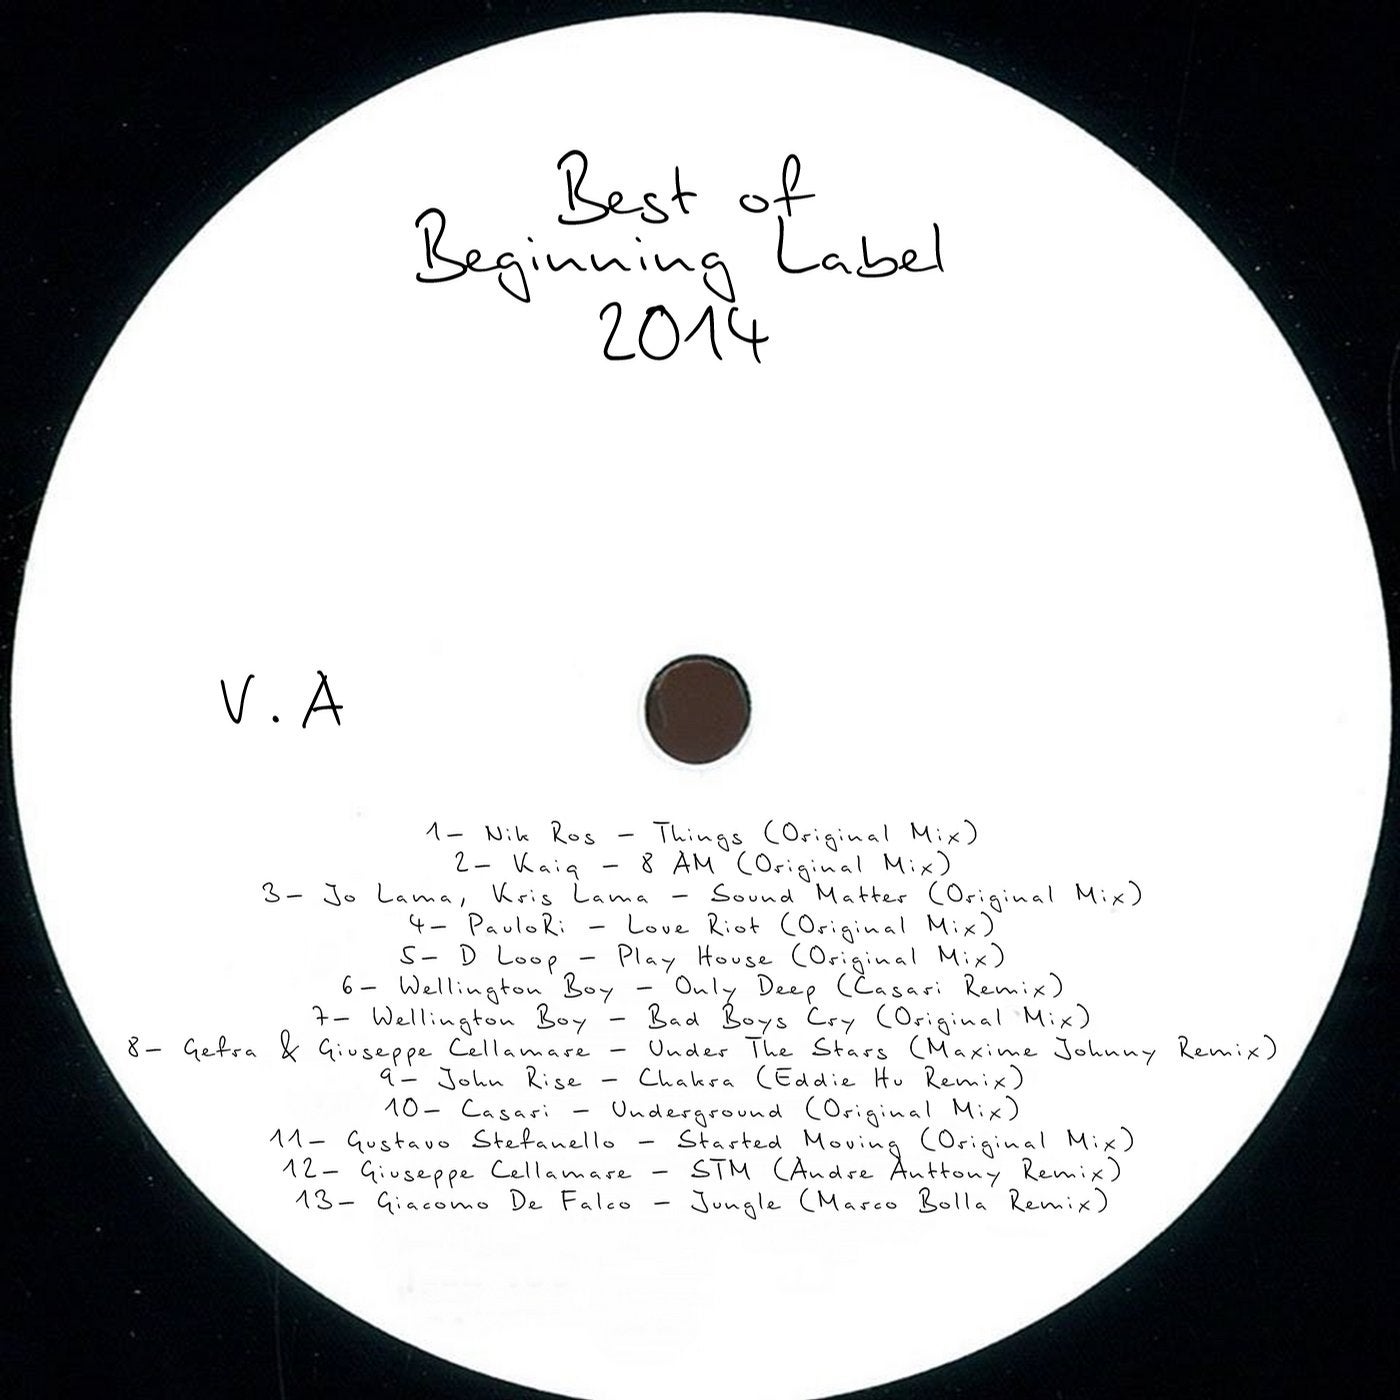 Best of Beginning Label 2014